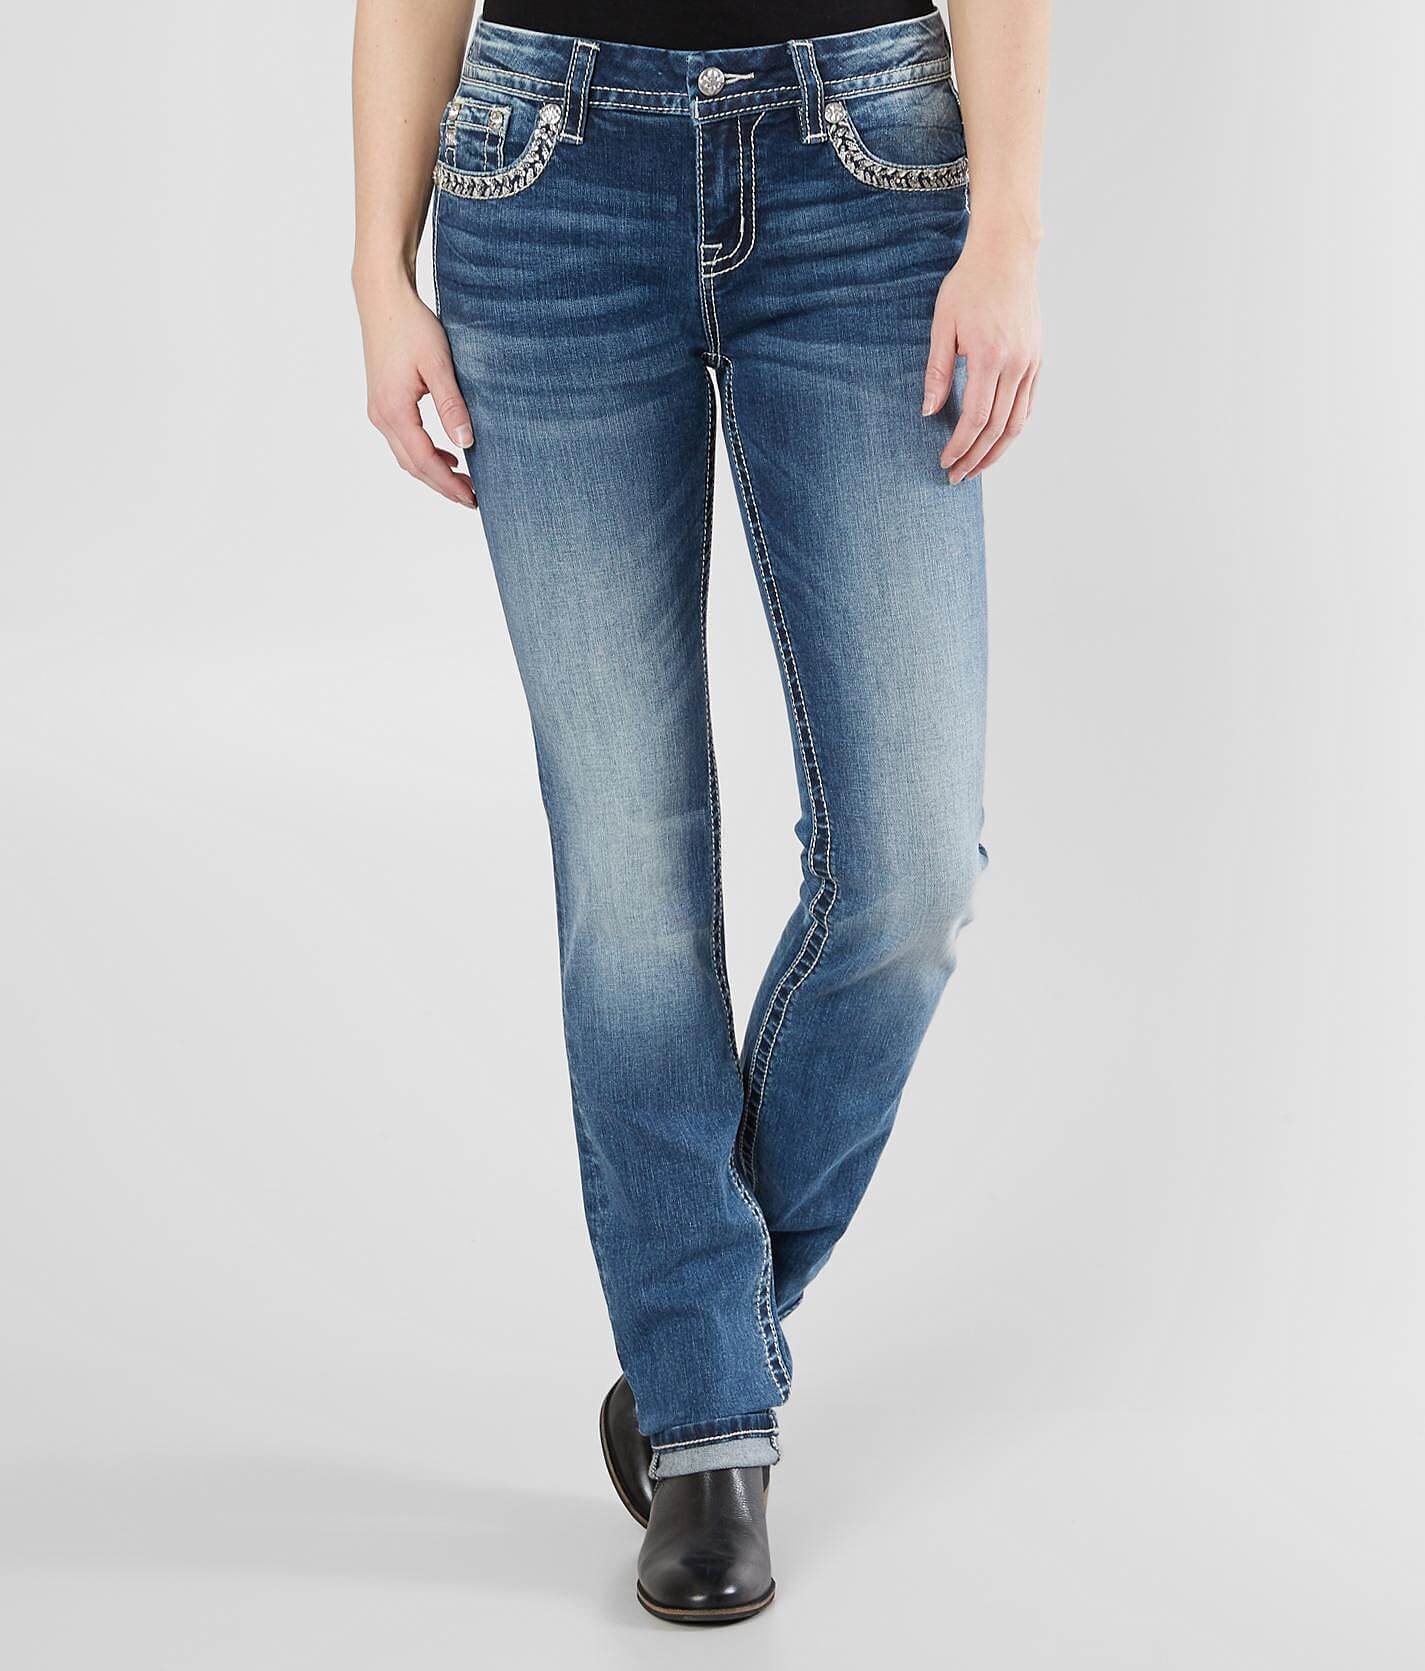 wrangler patch jeans